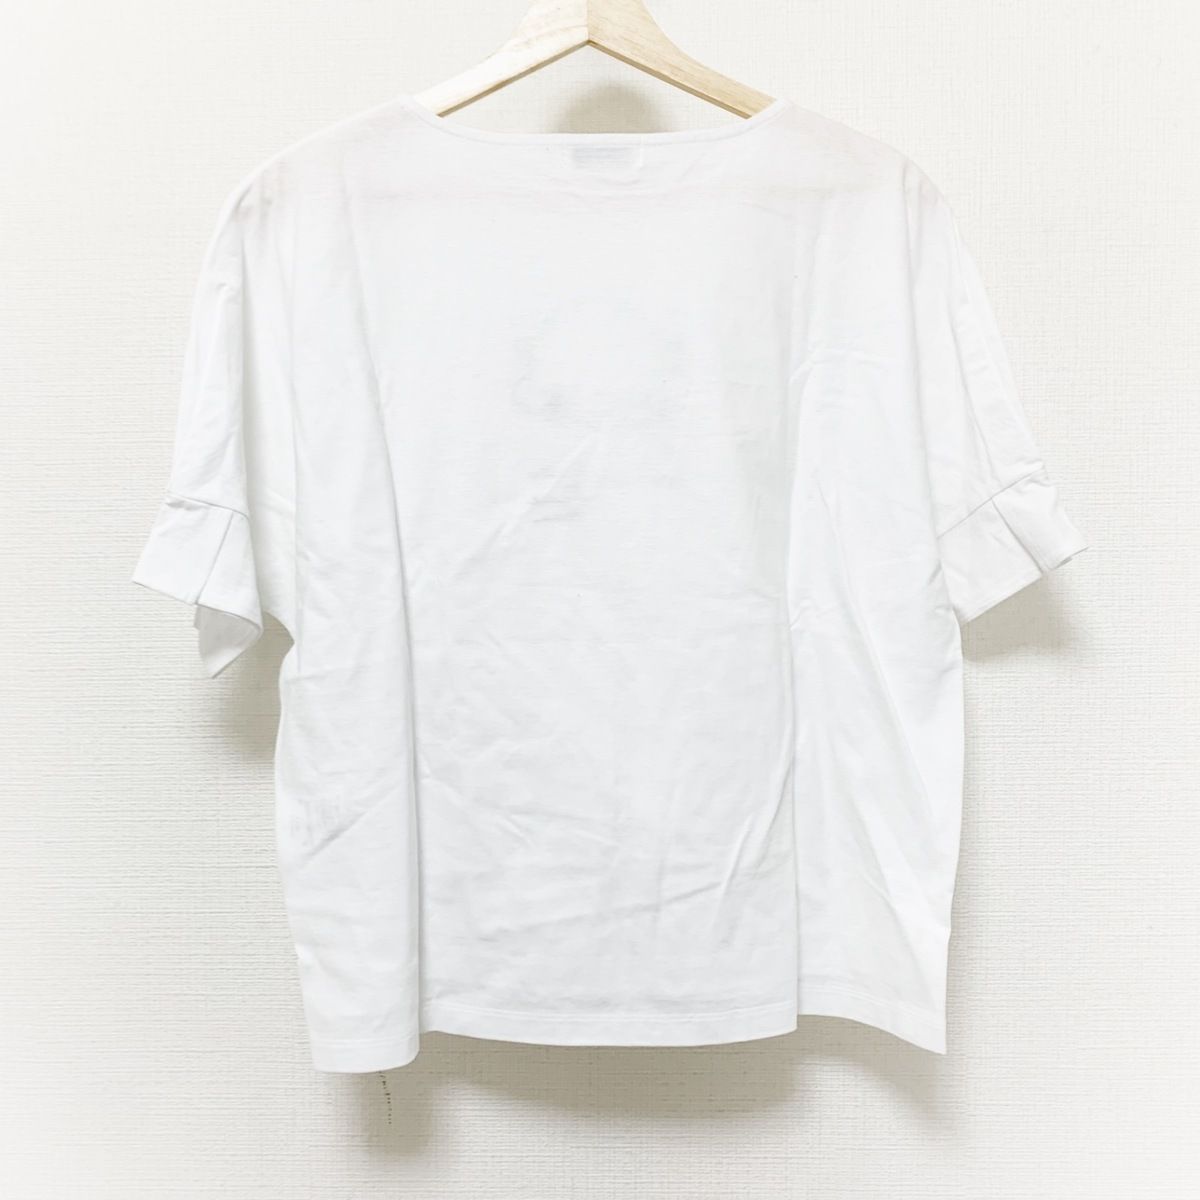 PICONE(ピッコーネ) 半袖Tシャツ サイズ38 S レディース美品 - 白 